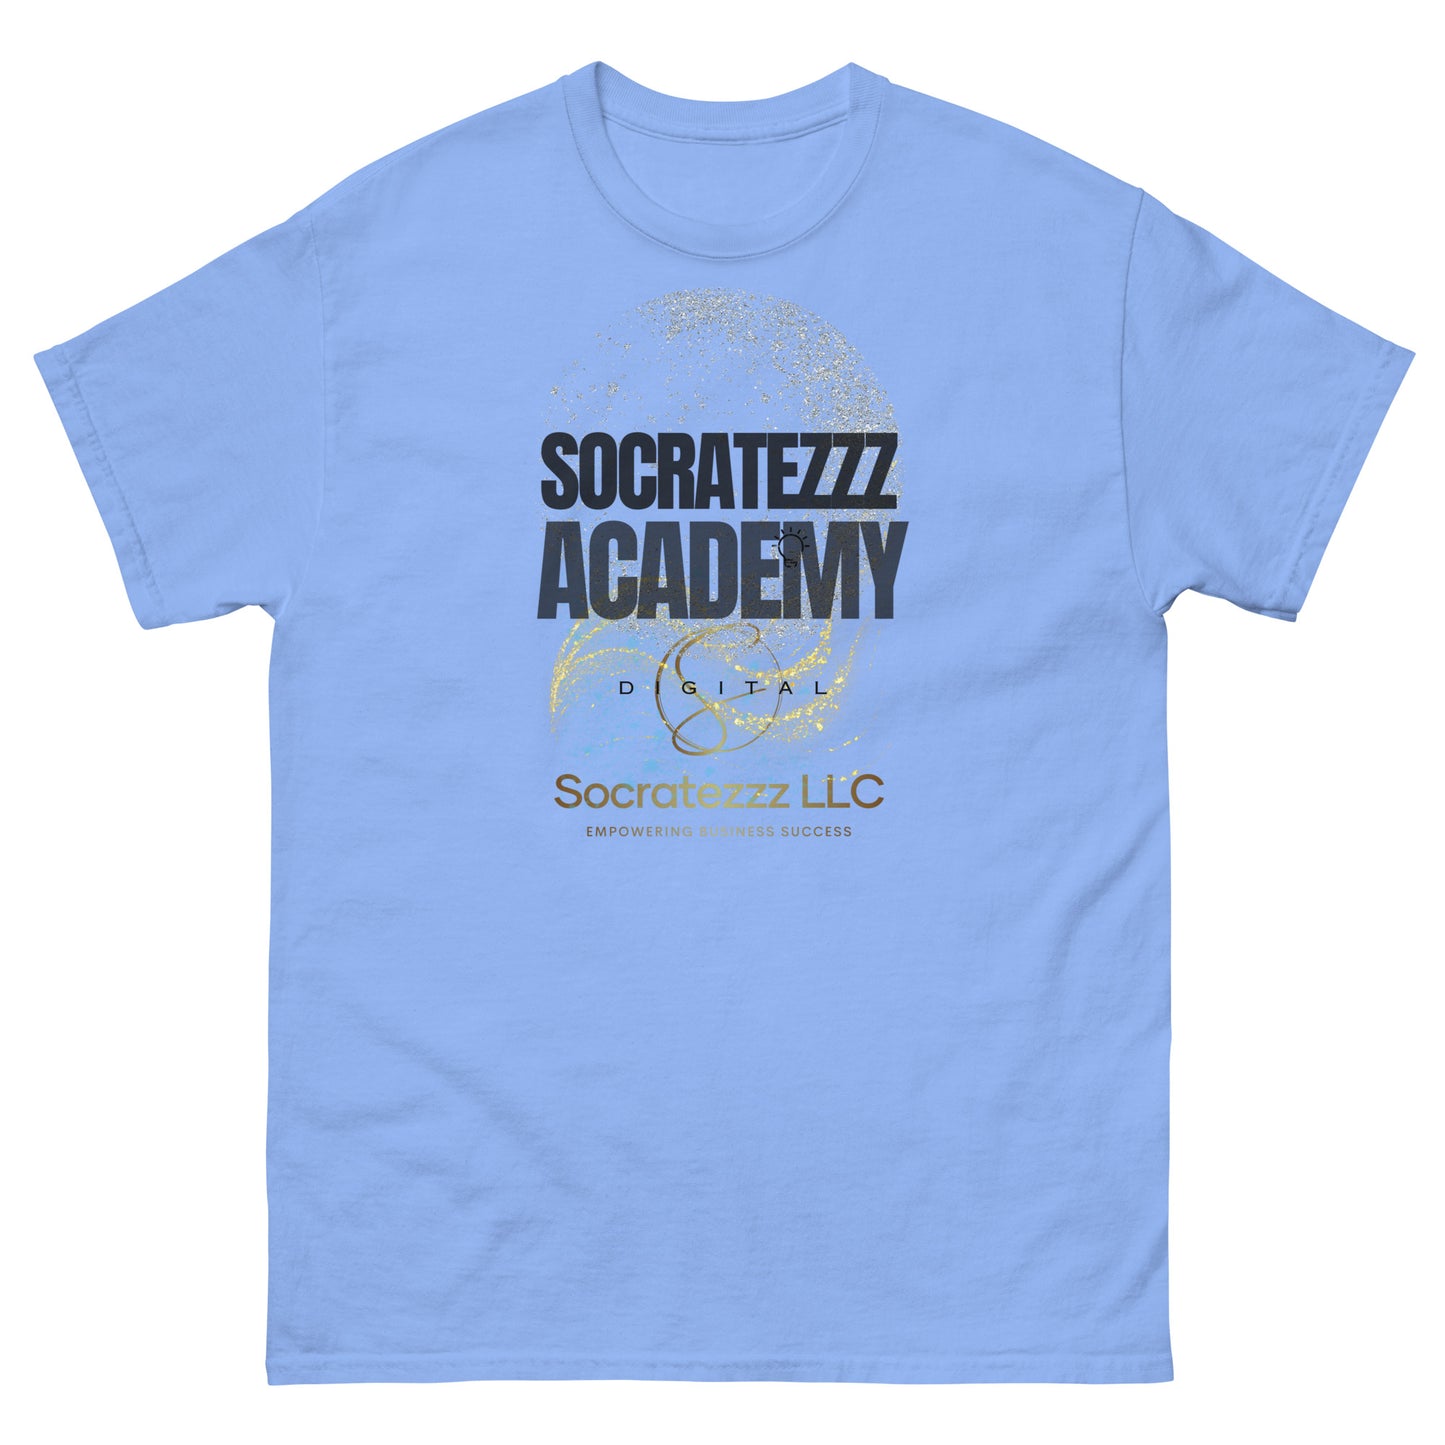 Socratezzz Academy - Men's classic tee